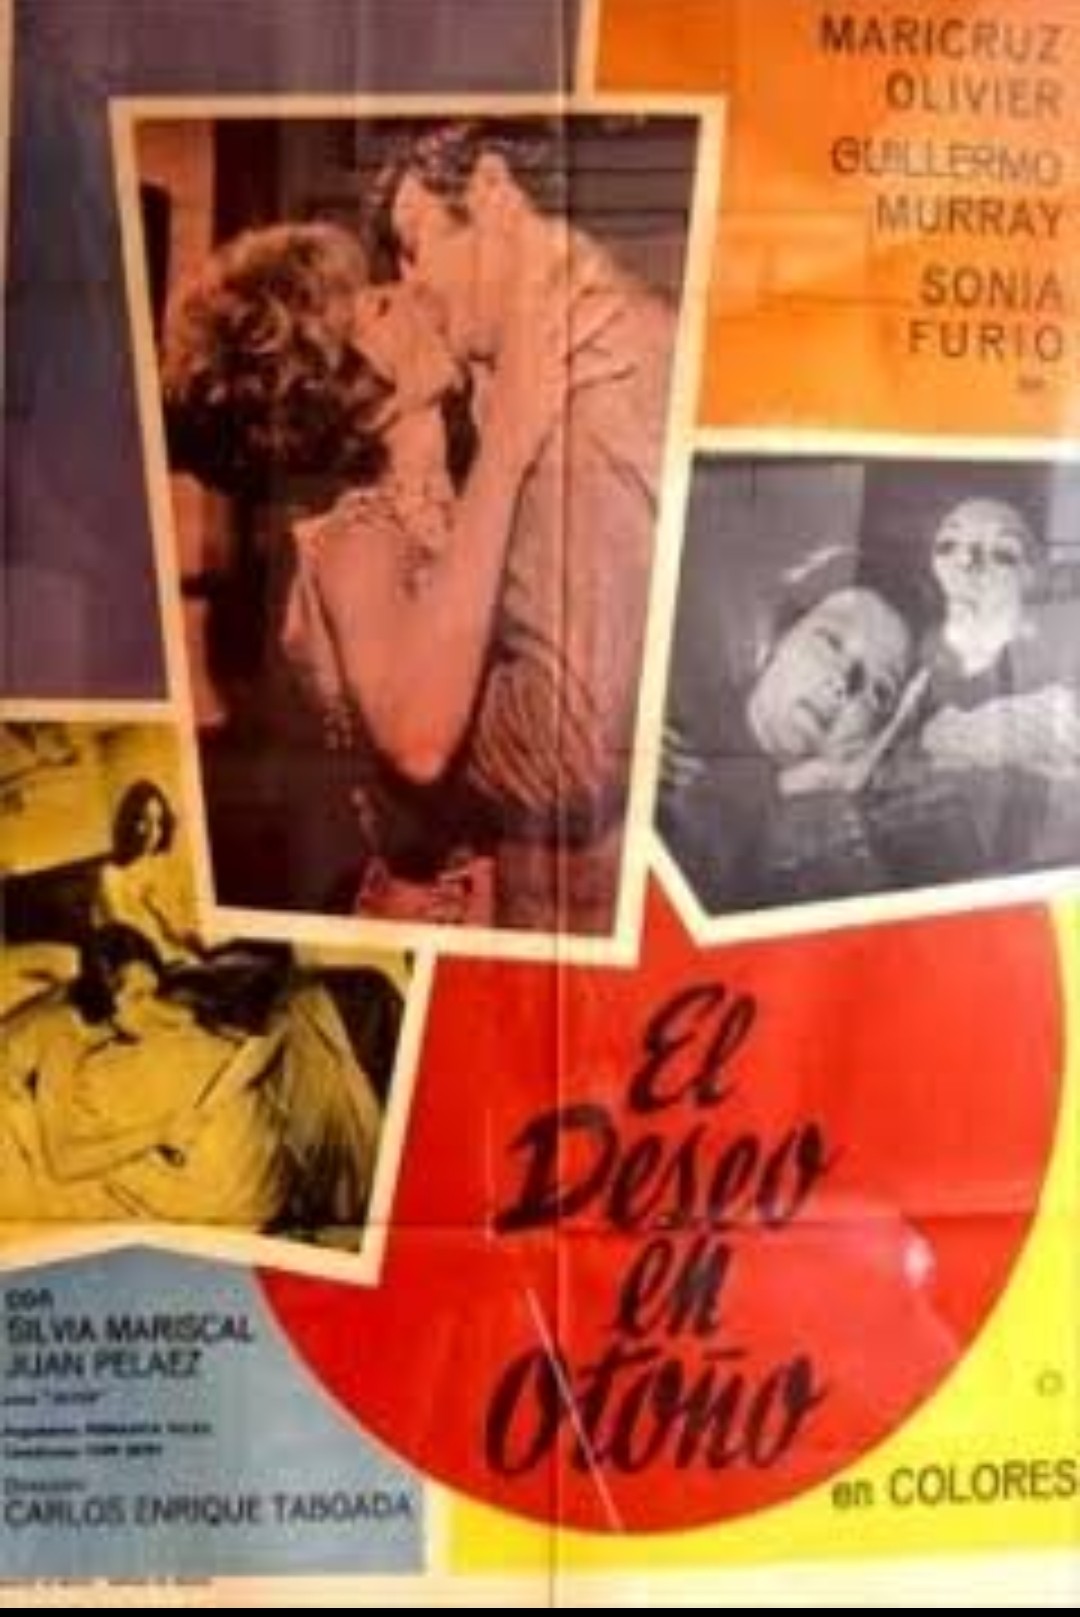 El deseo en otoño (1972) with English Subtitles on DVD on DVD